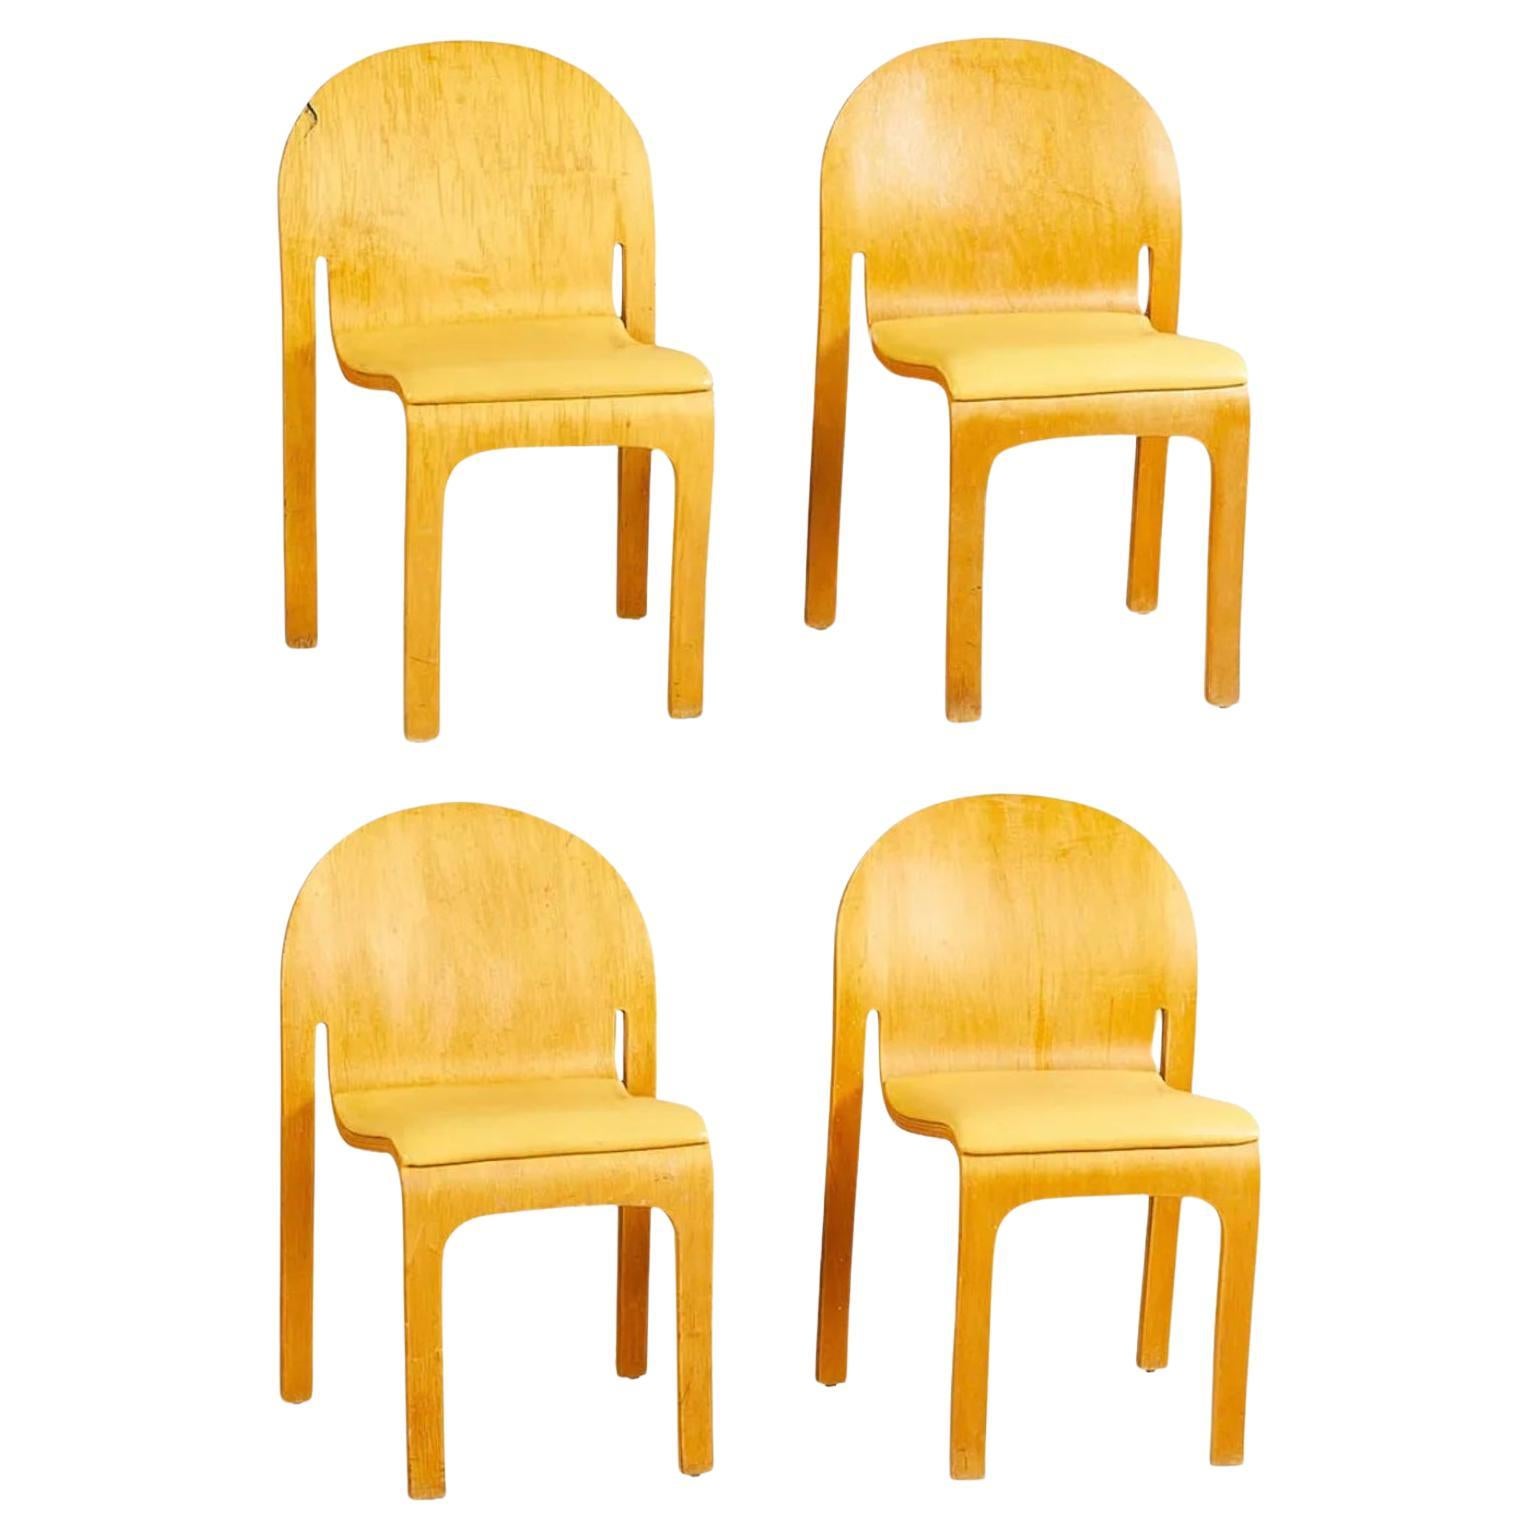 4 Peter Danko Design Mid Century Modern Bodyform Chairs Bent Wood